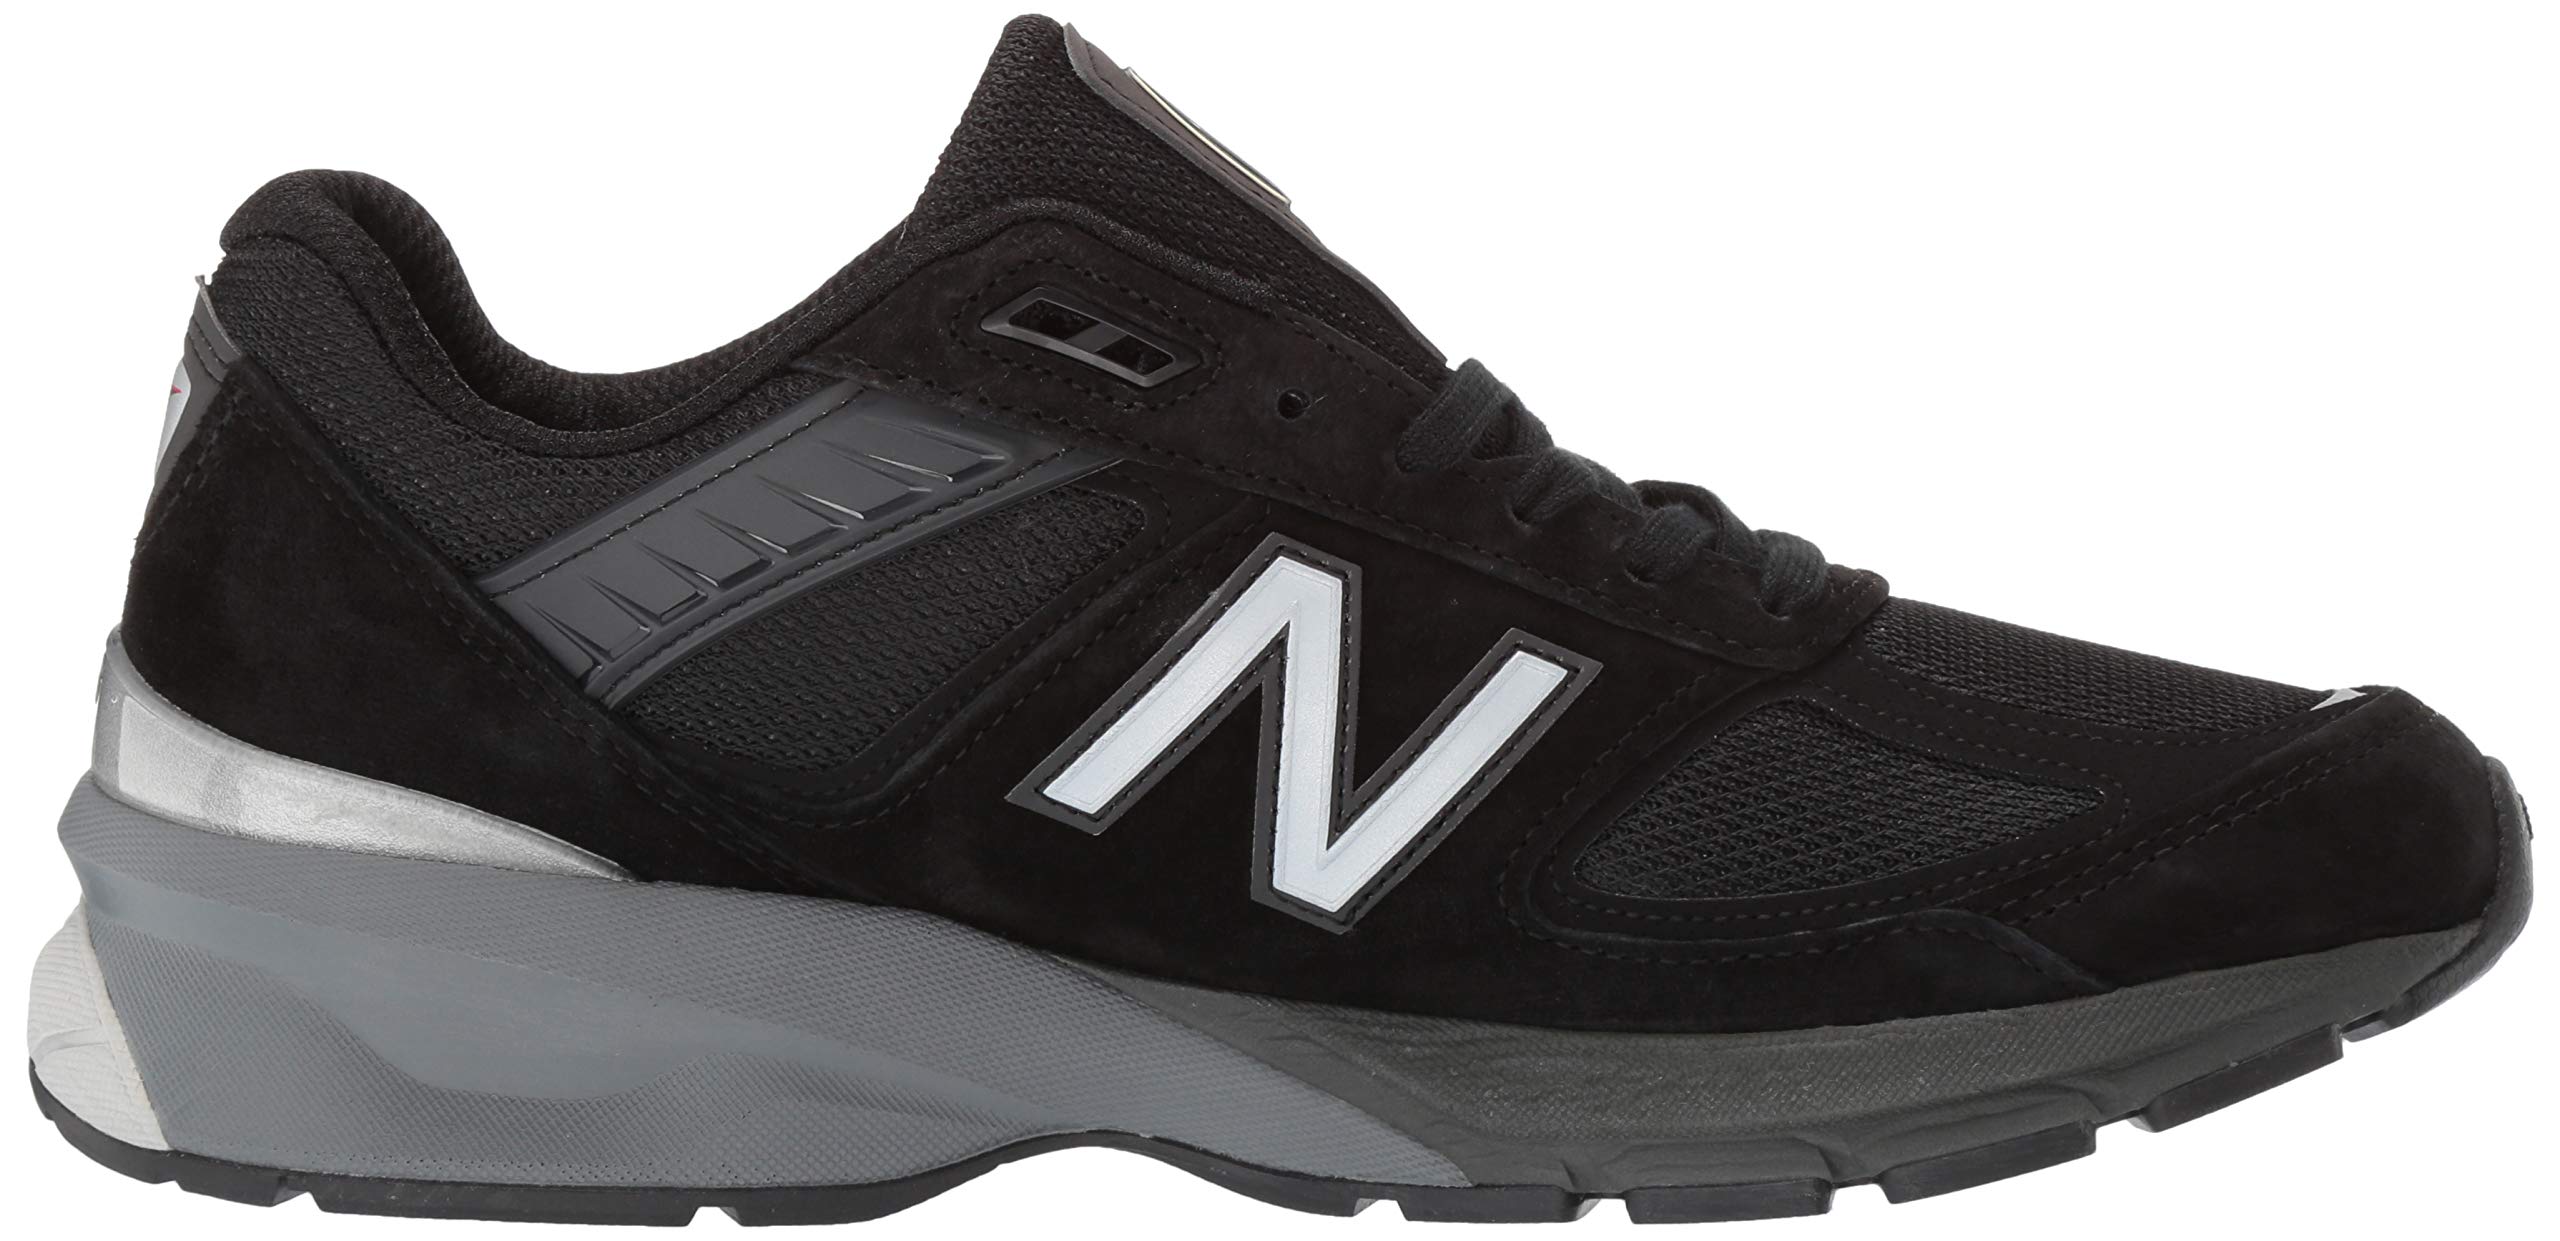 New Balance Narrow Men's 990V5-B Made in USA Sneaker 990BK5 990GL5 990NV5 (10.5 Narrow US Men, Black/Silver) - image 1 of 2